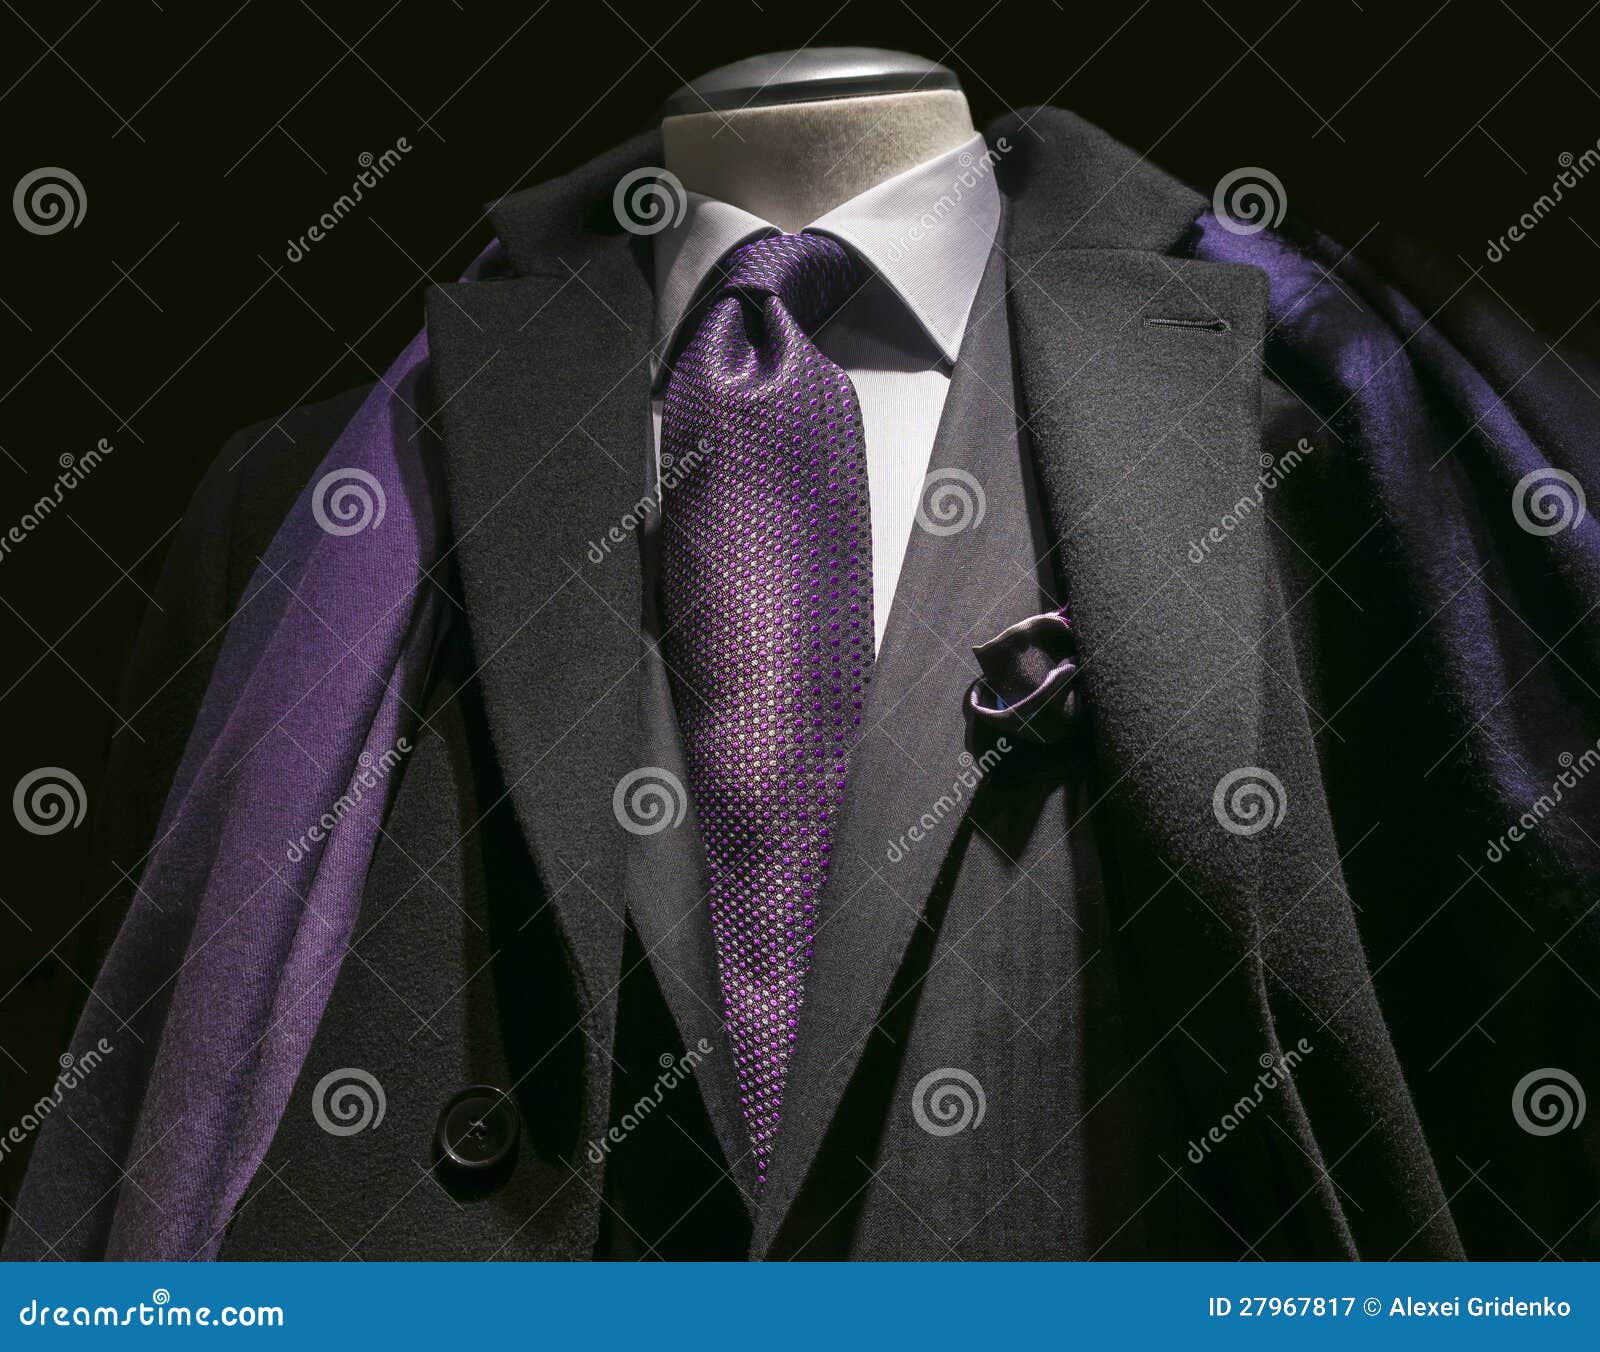 Buy > purple black tie dress > in stock